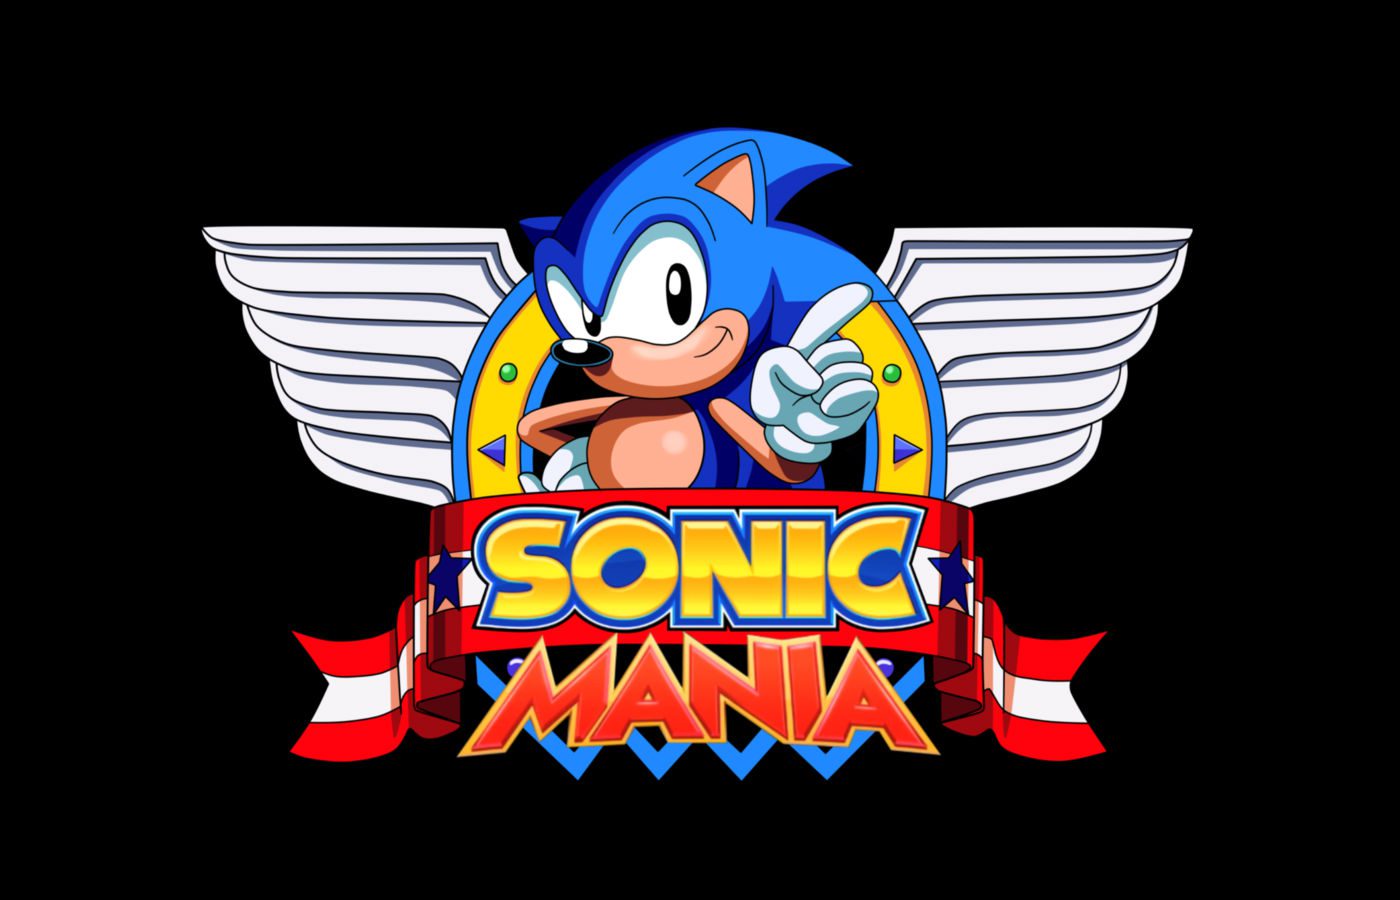 Sonic mania mod studio download